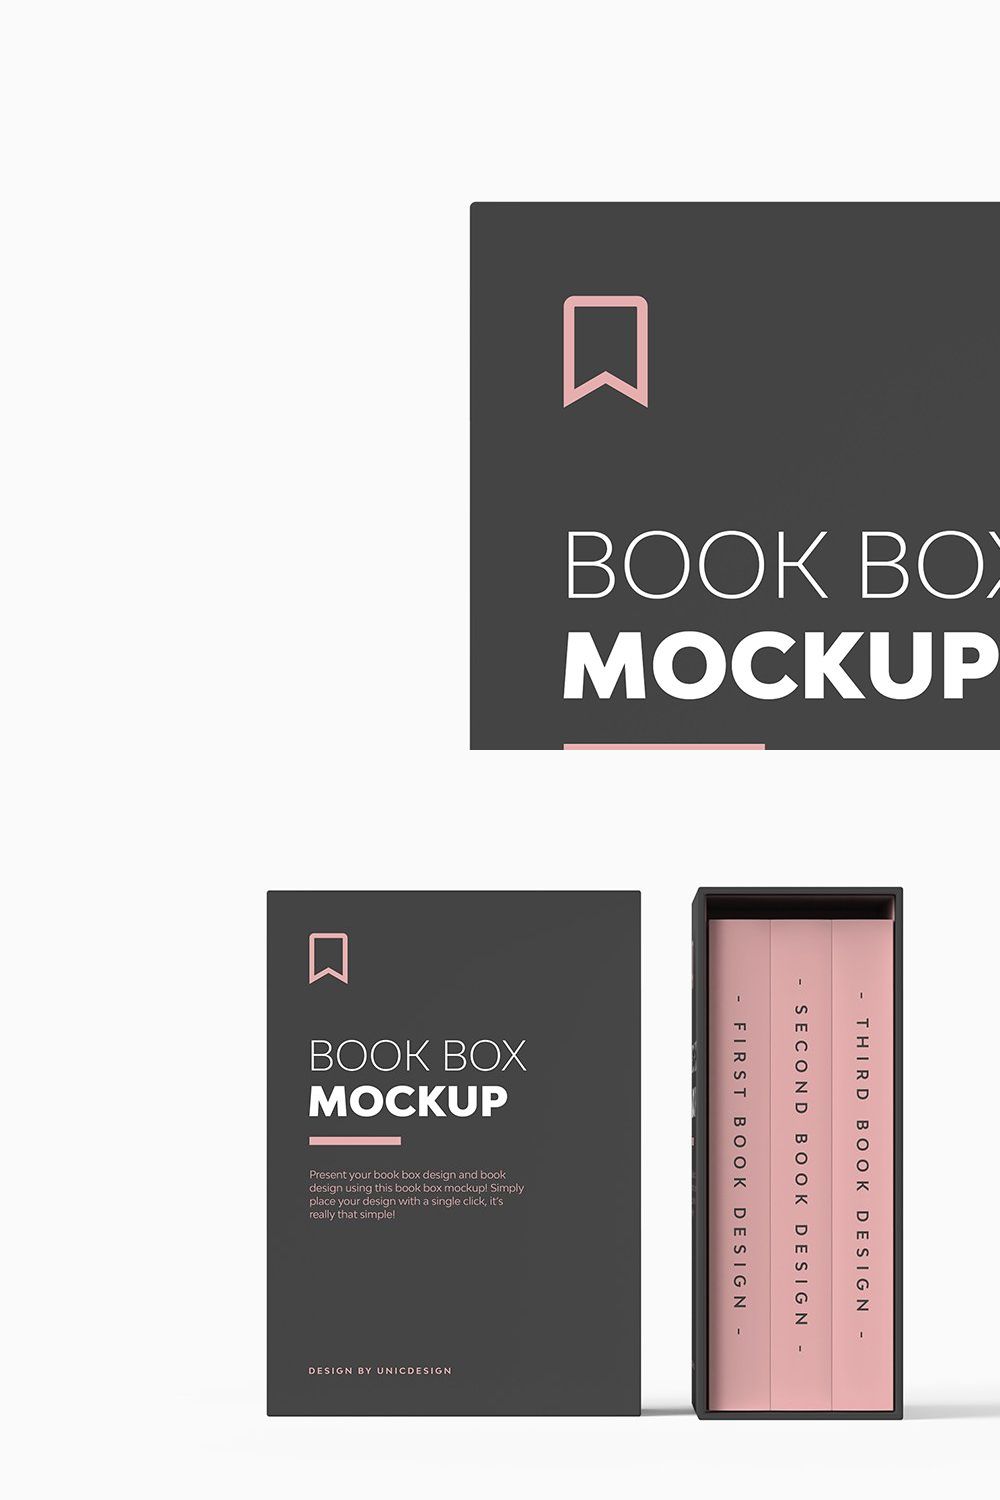 Book Box Mockup pinterest preview image.